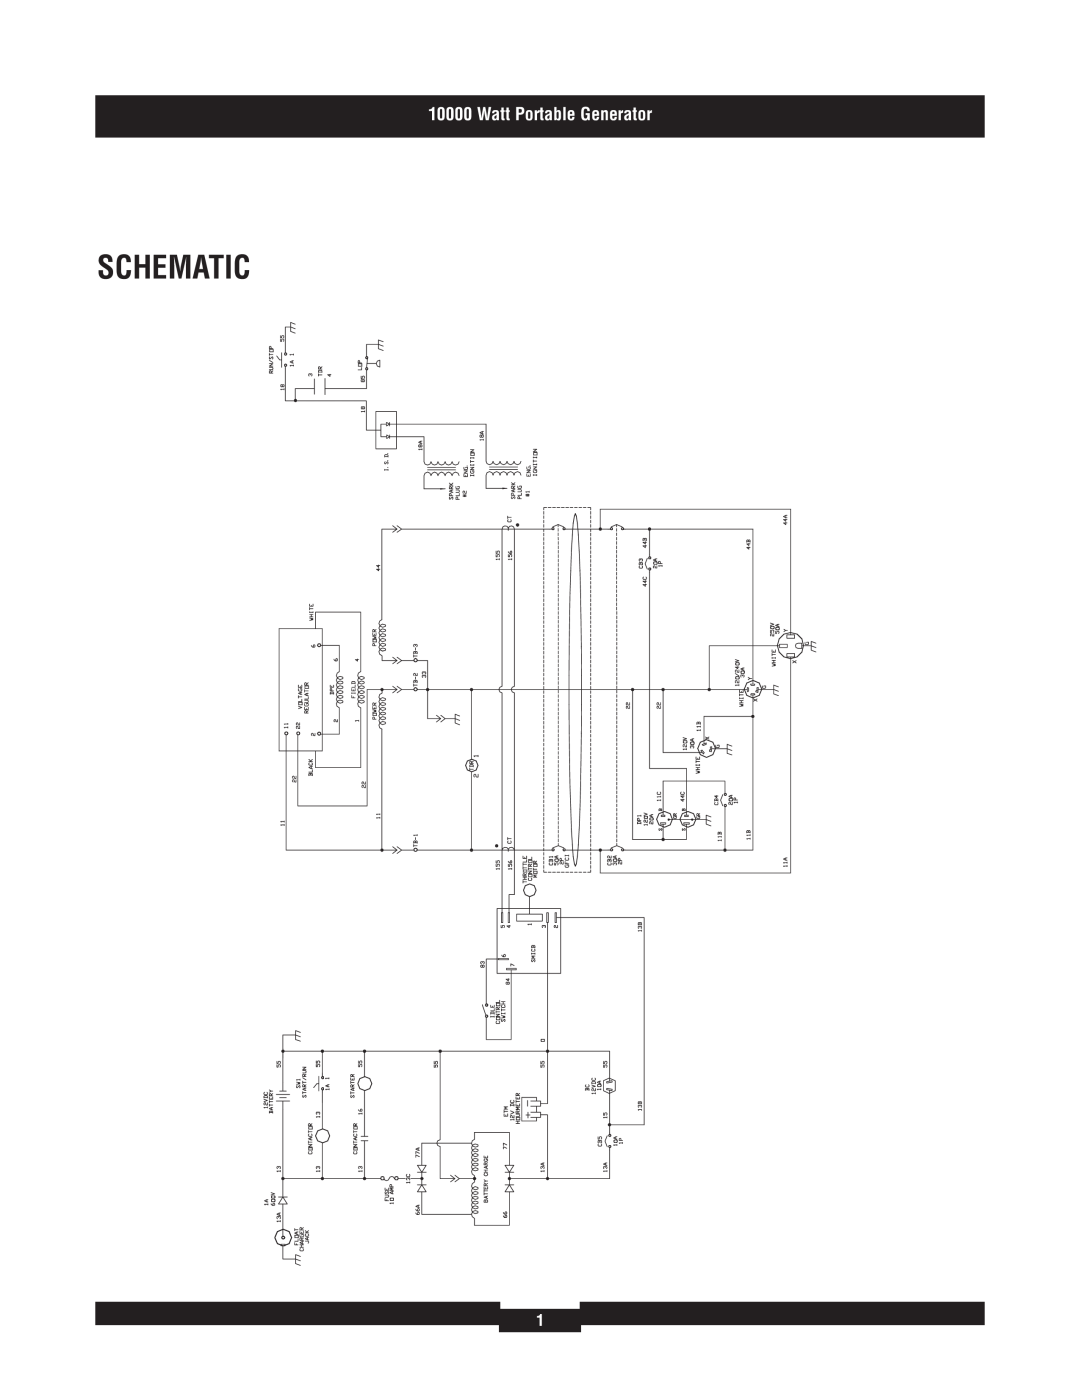 Briggs & Stratton 030338 manual Schematic, Watt Portable Generator 